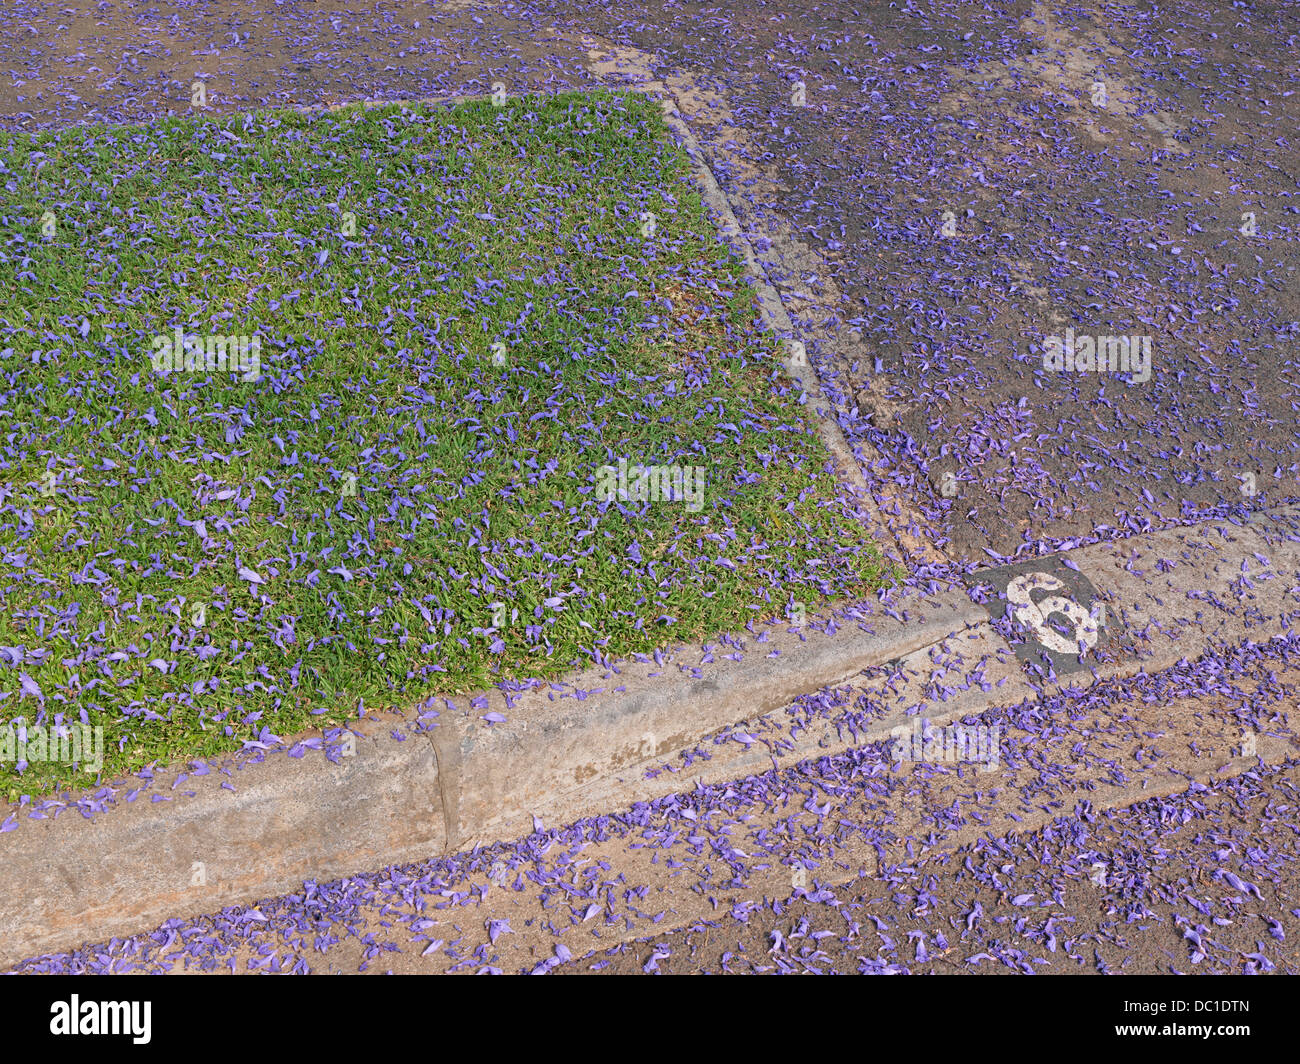 South Africa, Johannesburg, 2010. Jacaranda blossoms in the suburbs of Johannesburg. Stock Photo